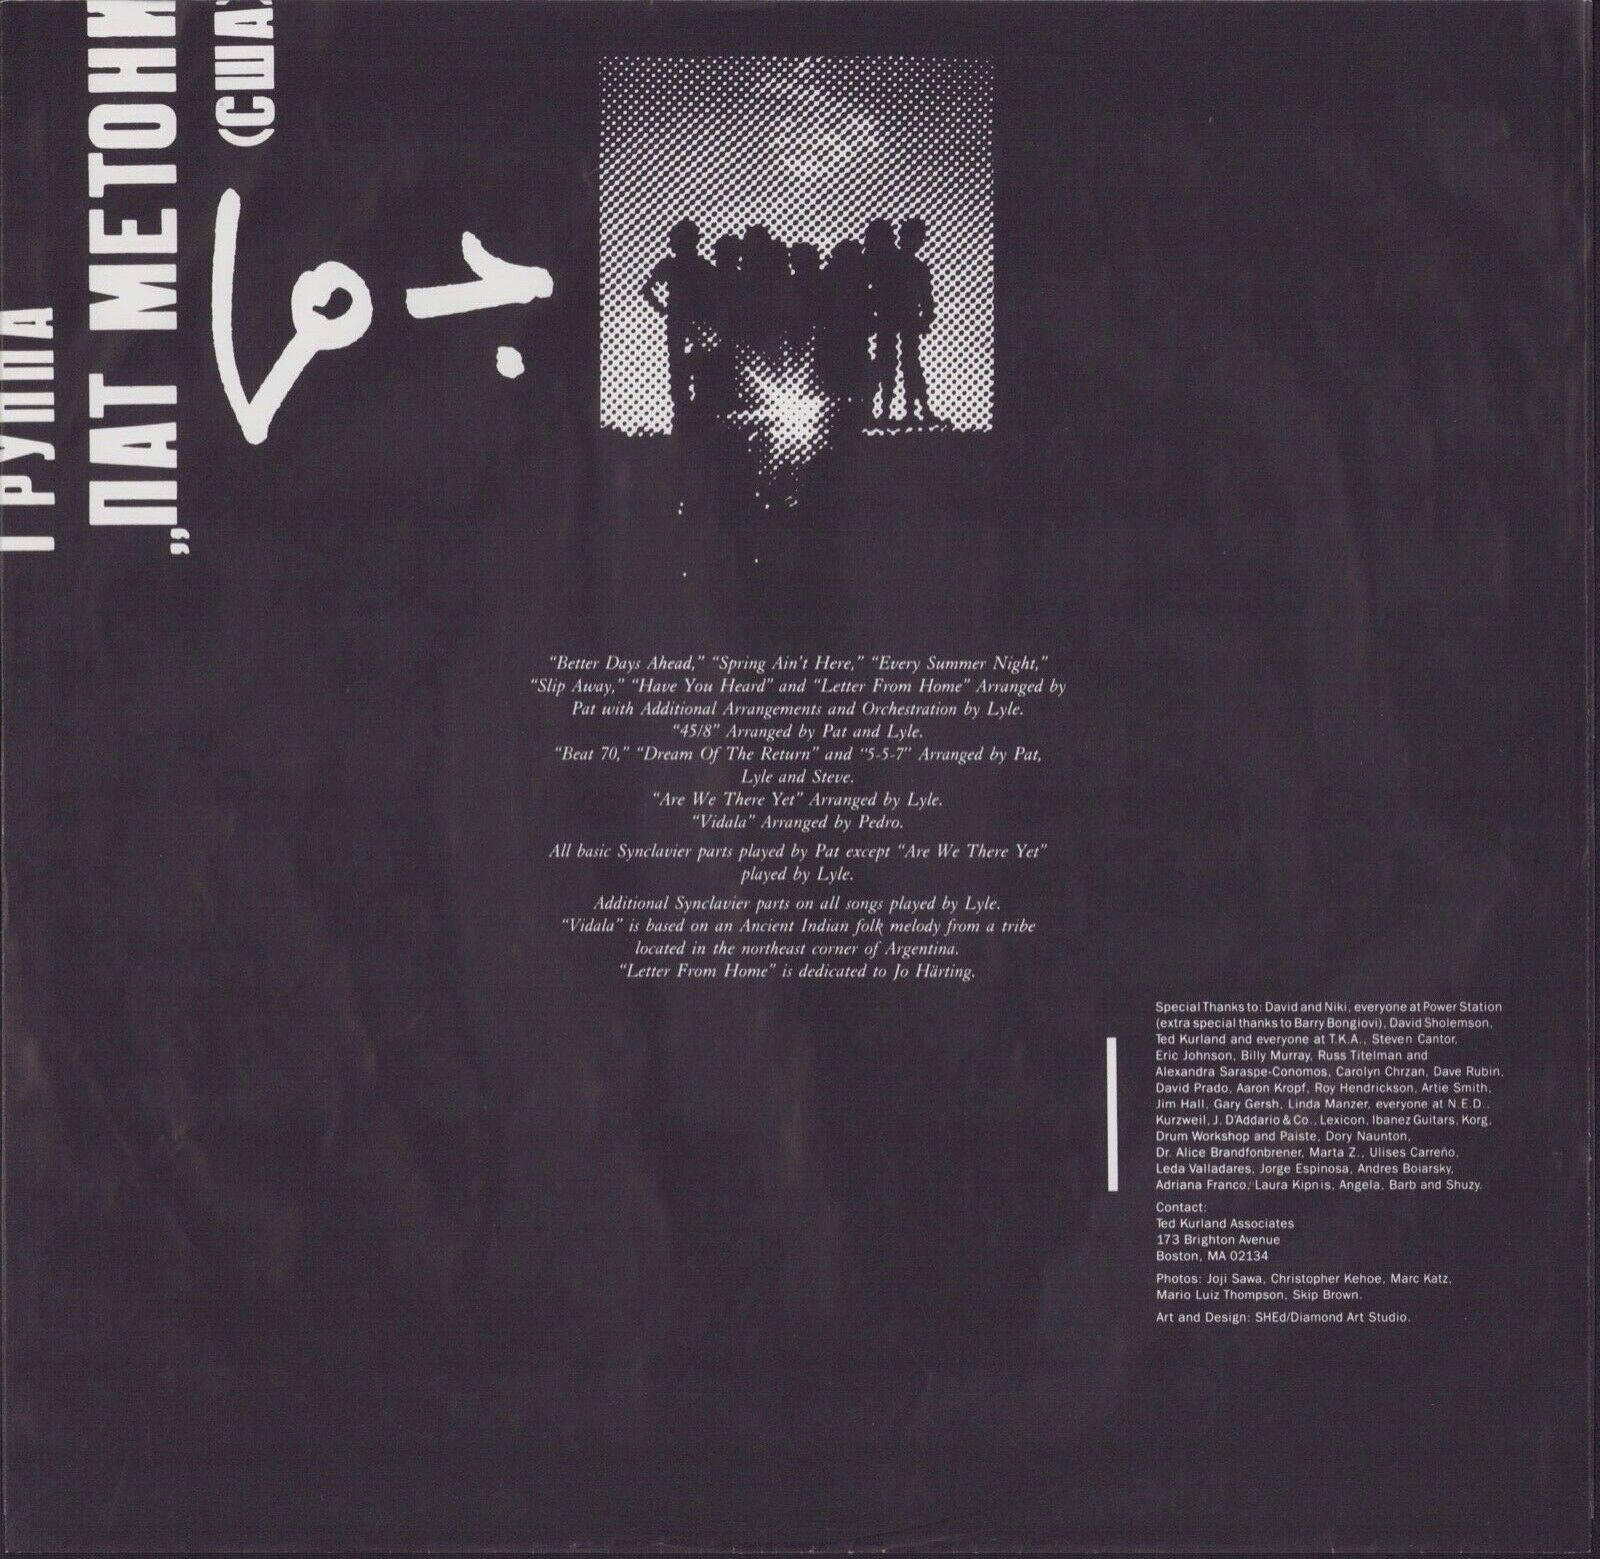 Pat Metheny Group - Letter From Home Vinyl LP